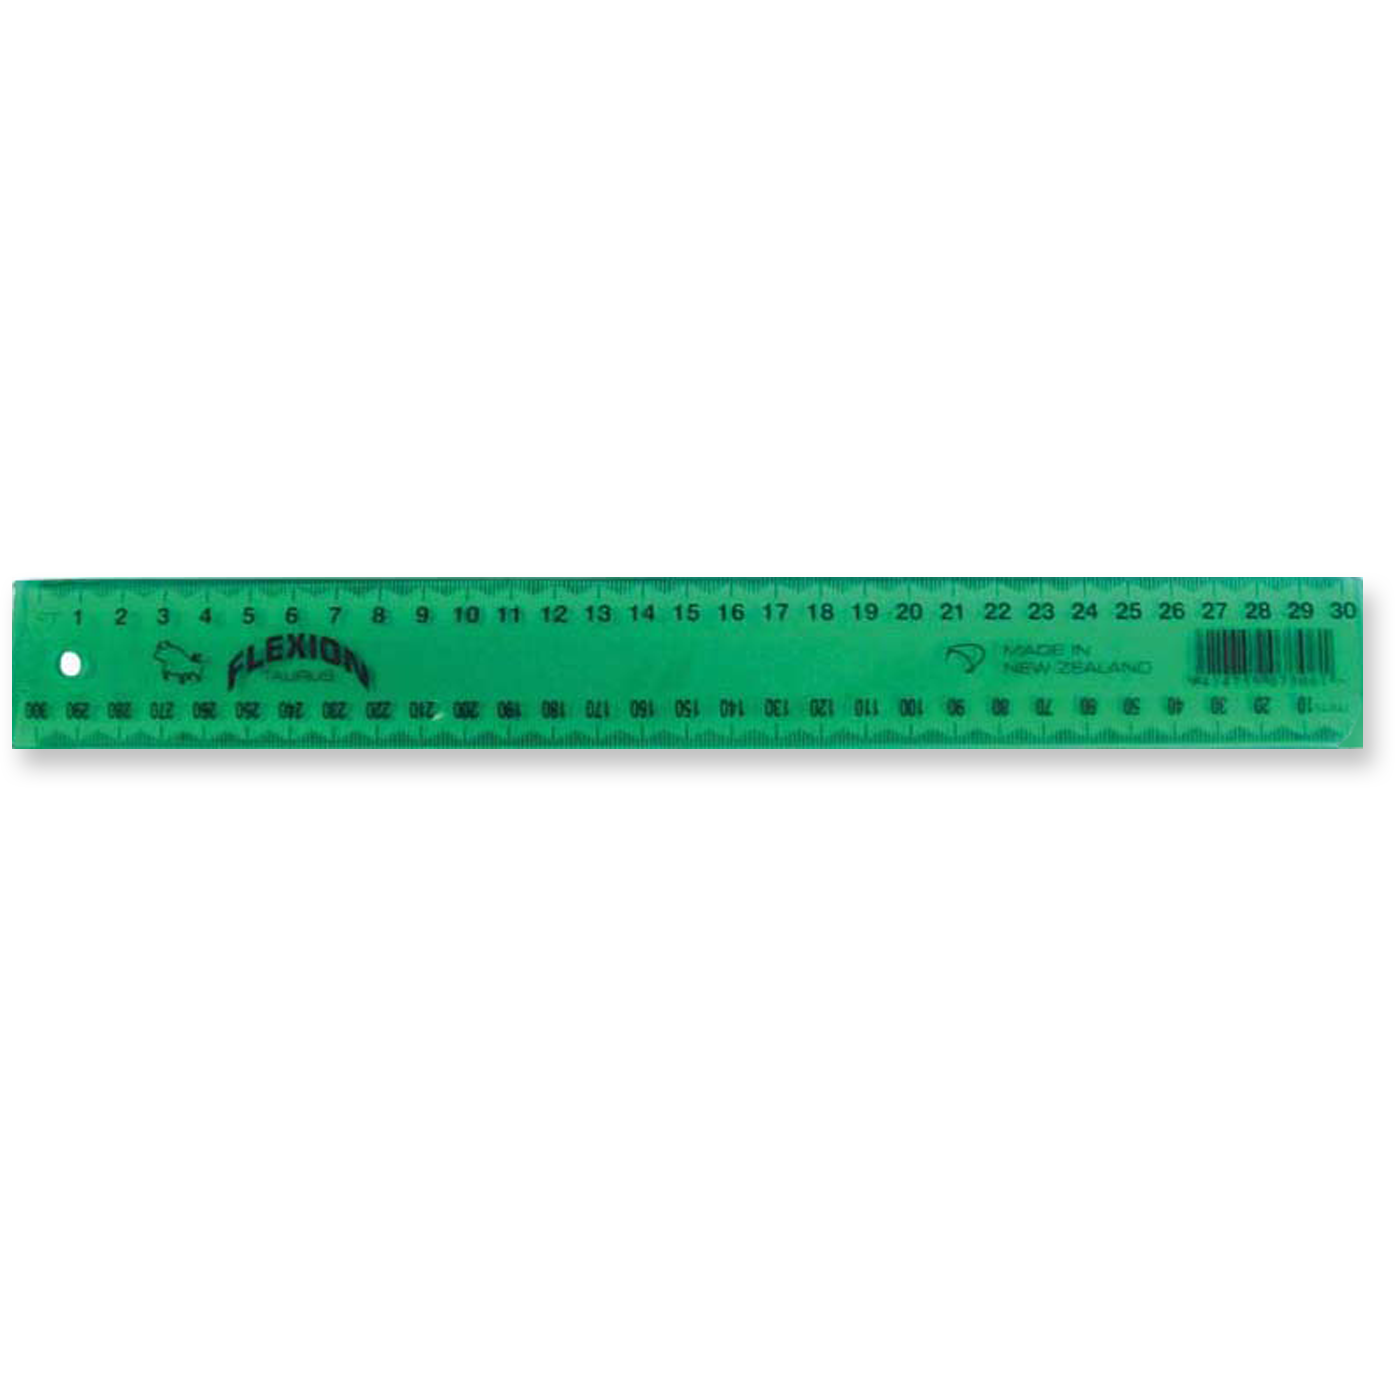 Taurus Ruler 30cm Flexion Green